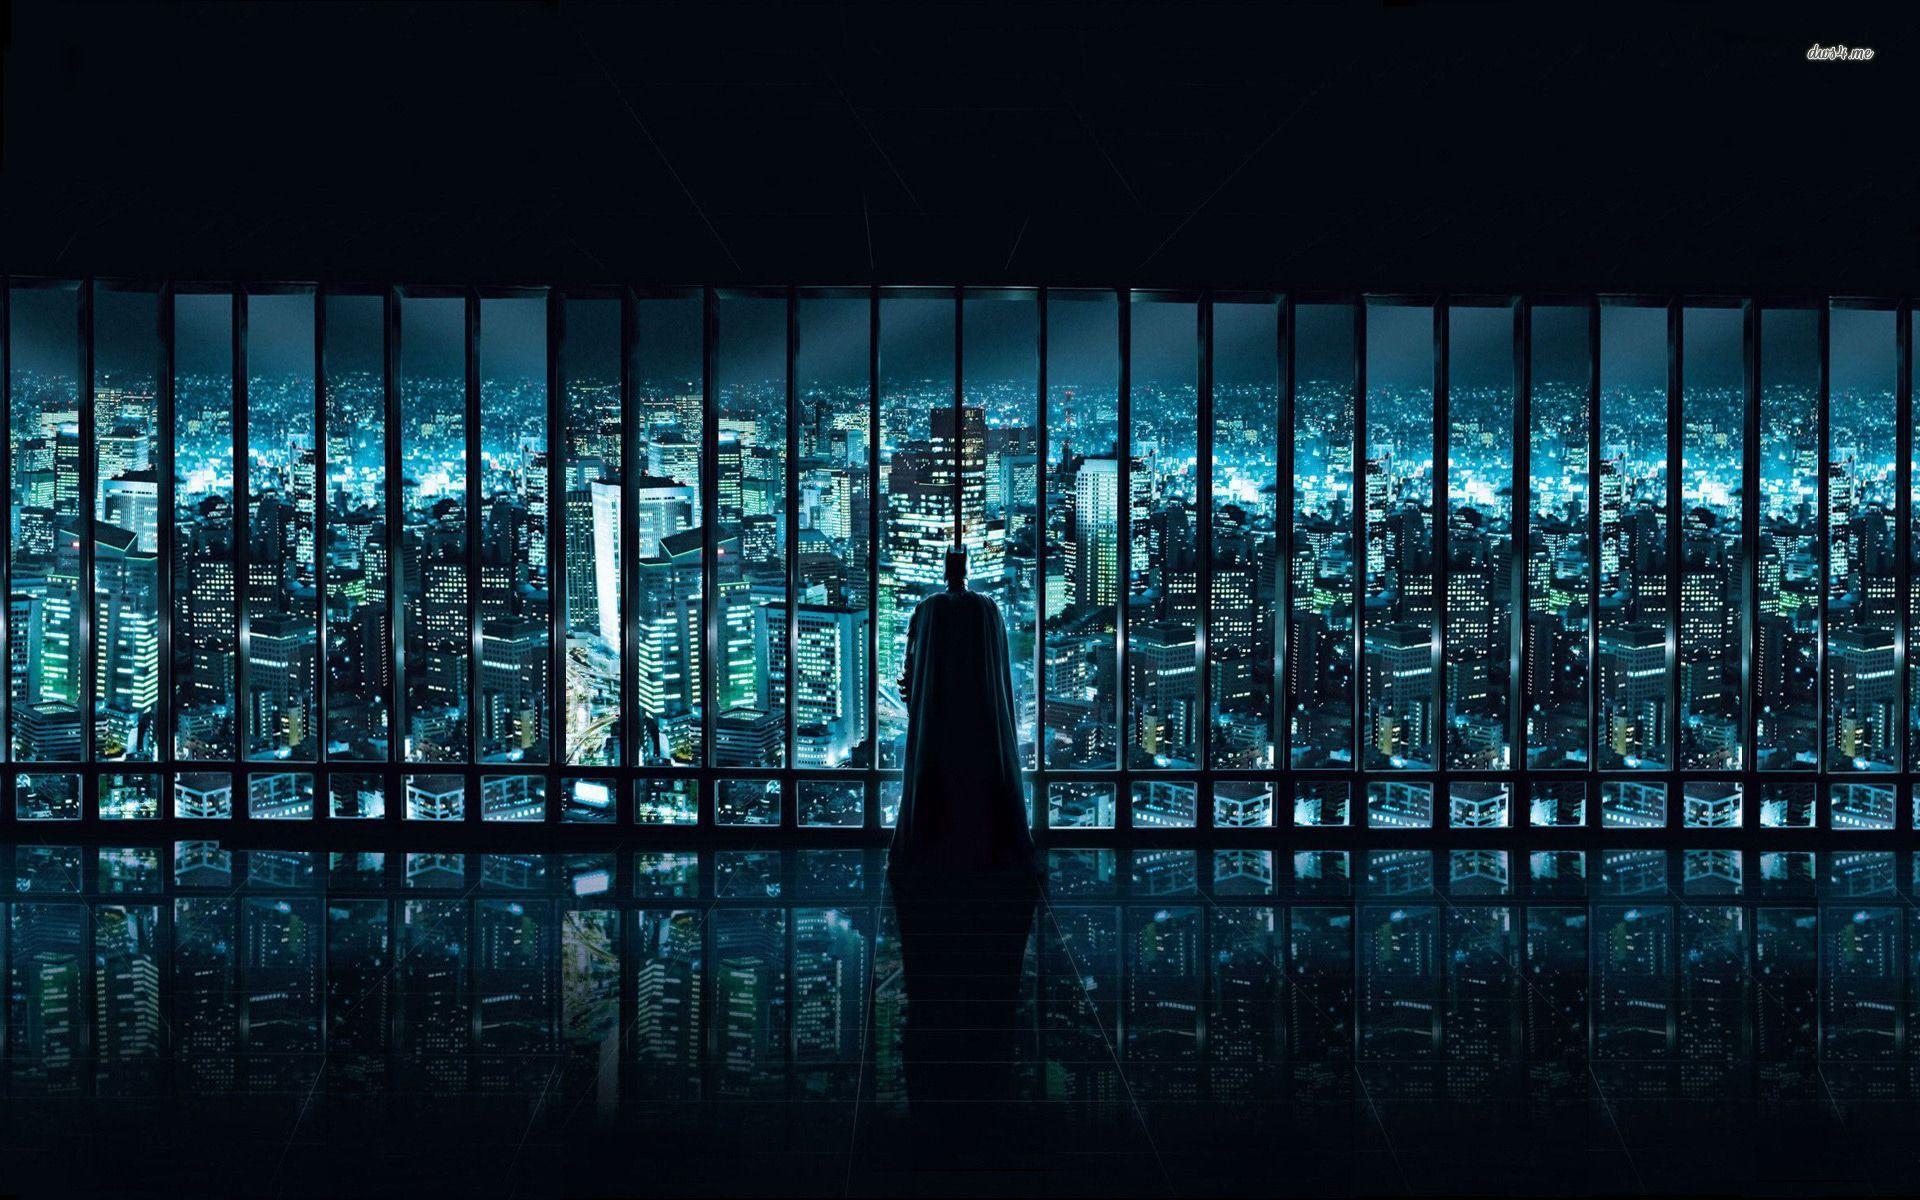 The Dark Knight Rises wallpaper wallpaper - #